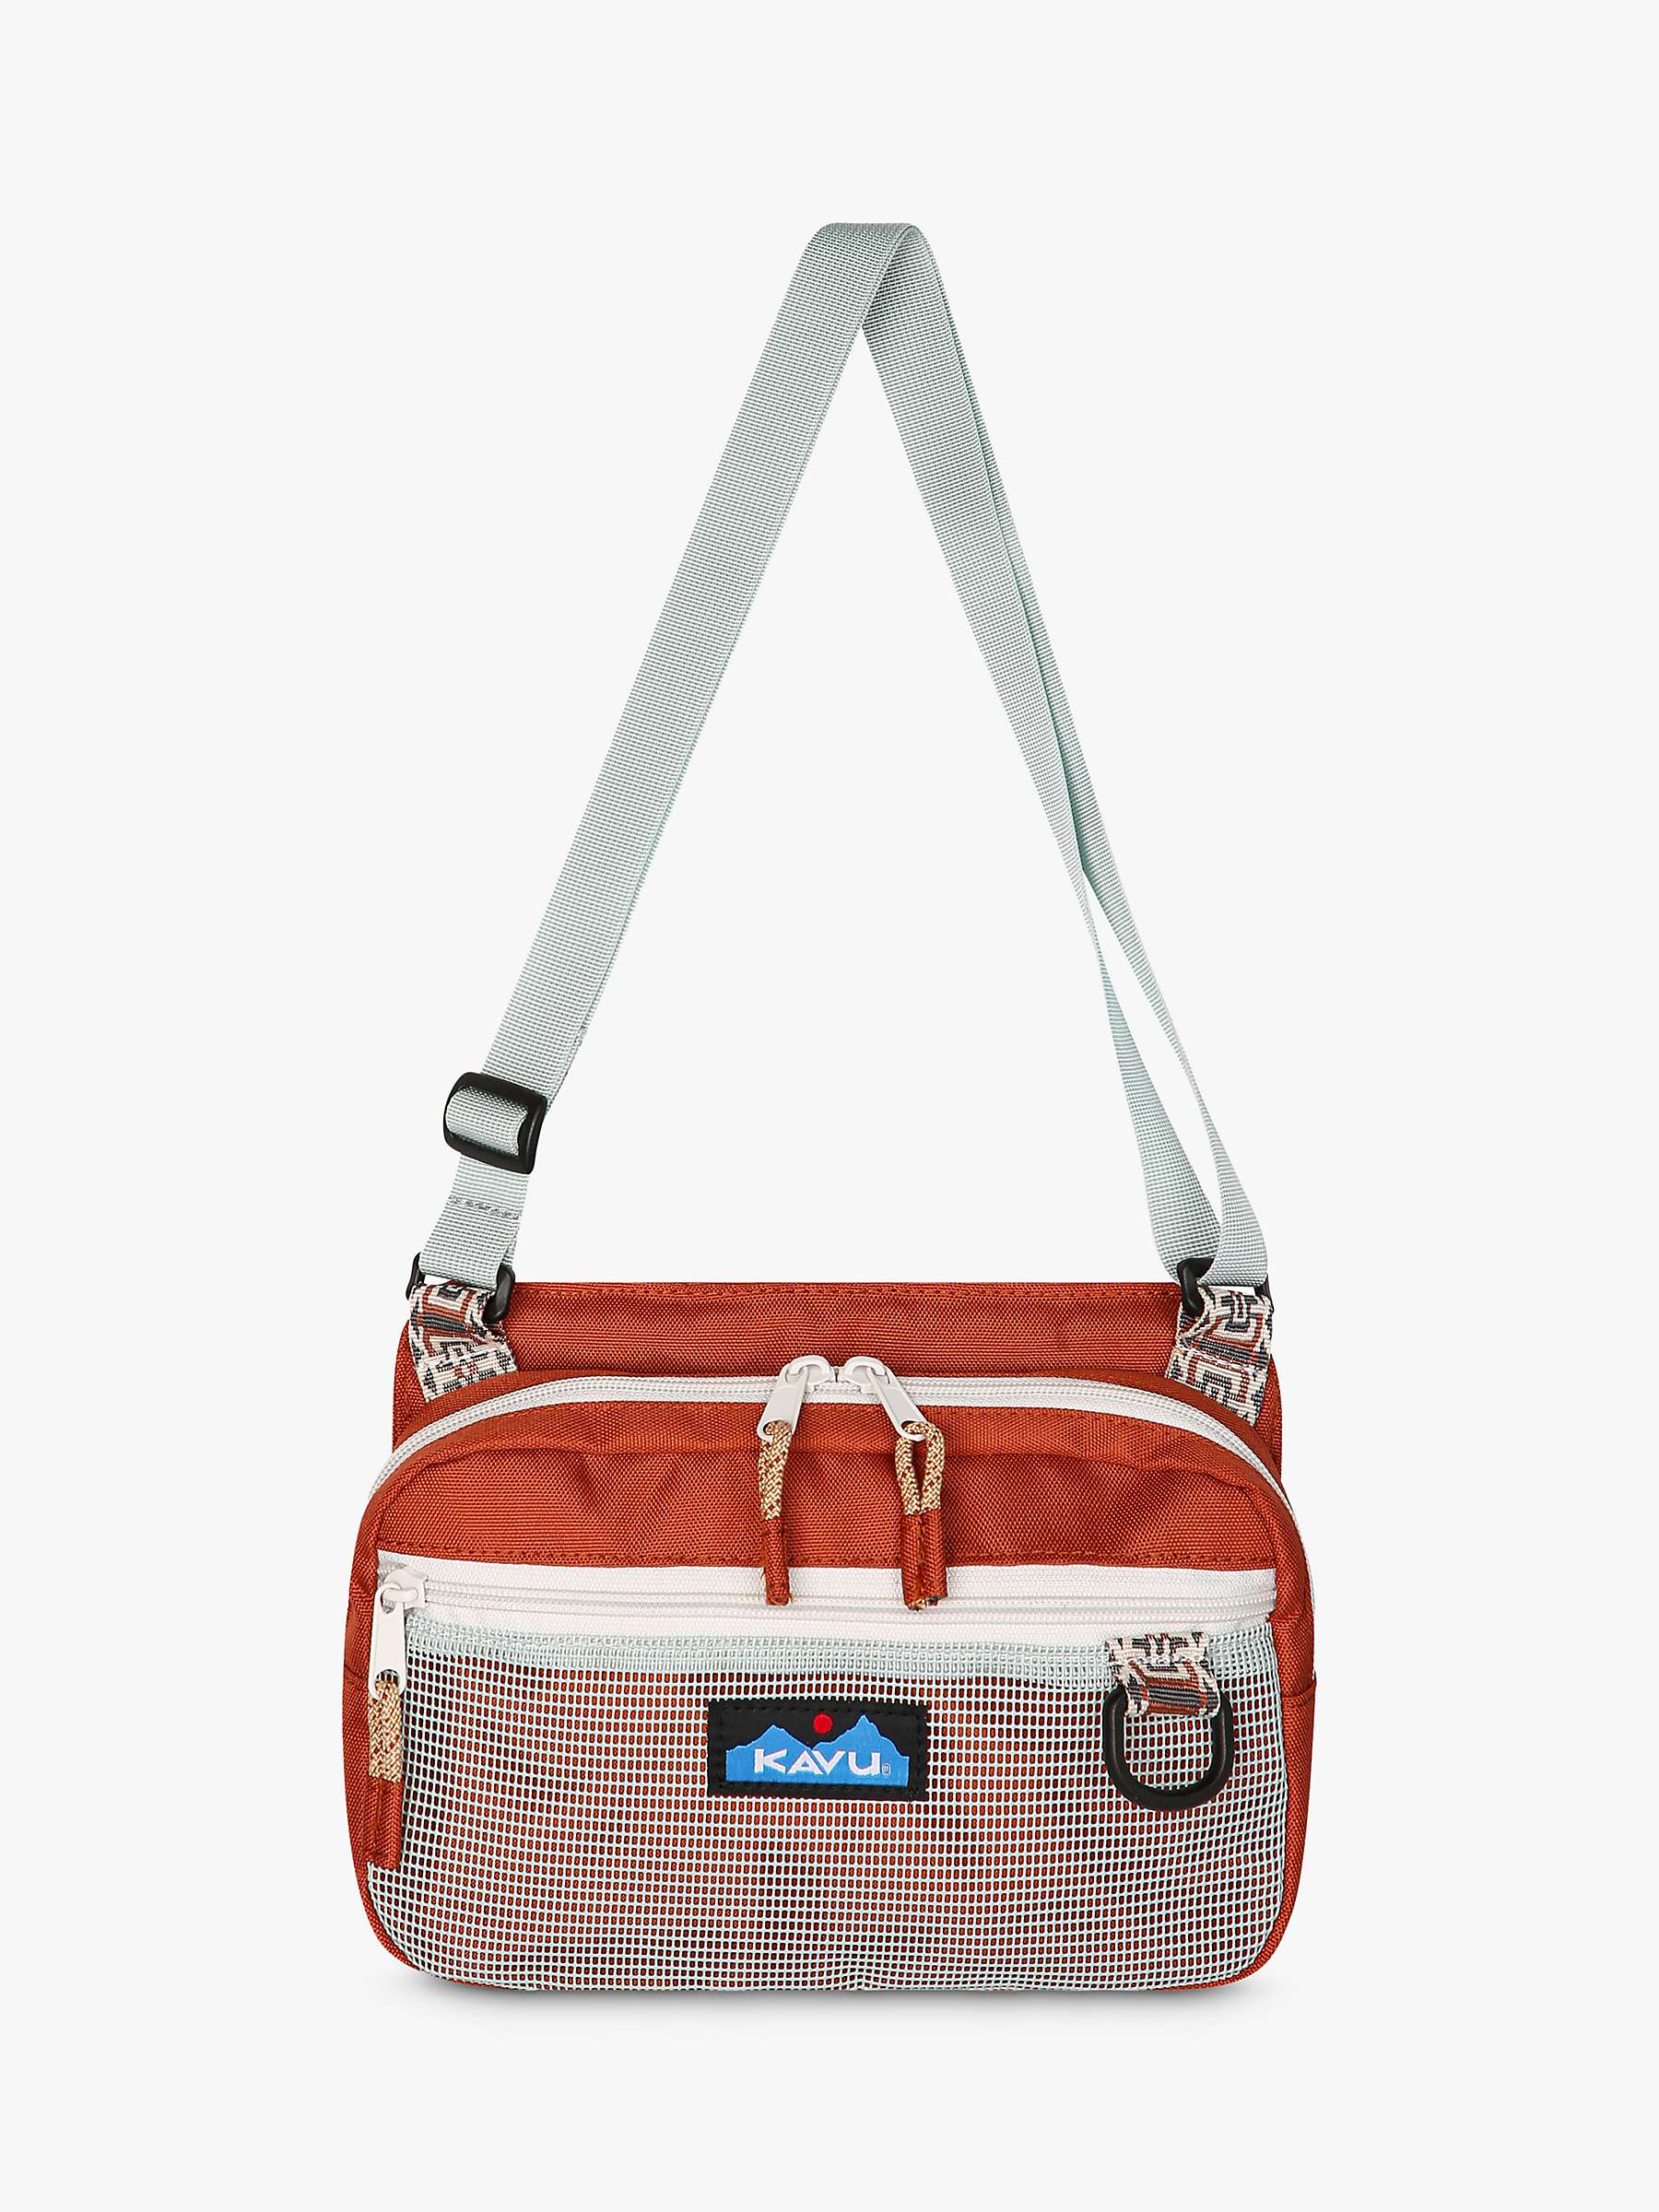 Buy KAVU Delray Beach Cross Body Bag, Cool Aqua/Orange Online at johnlewis.com